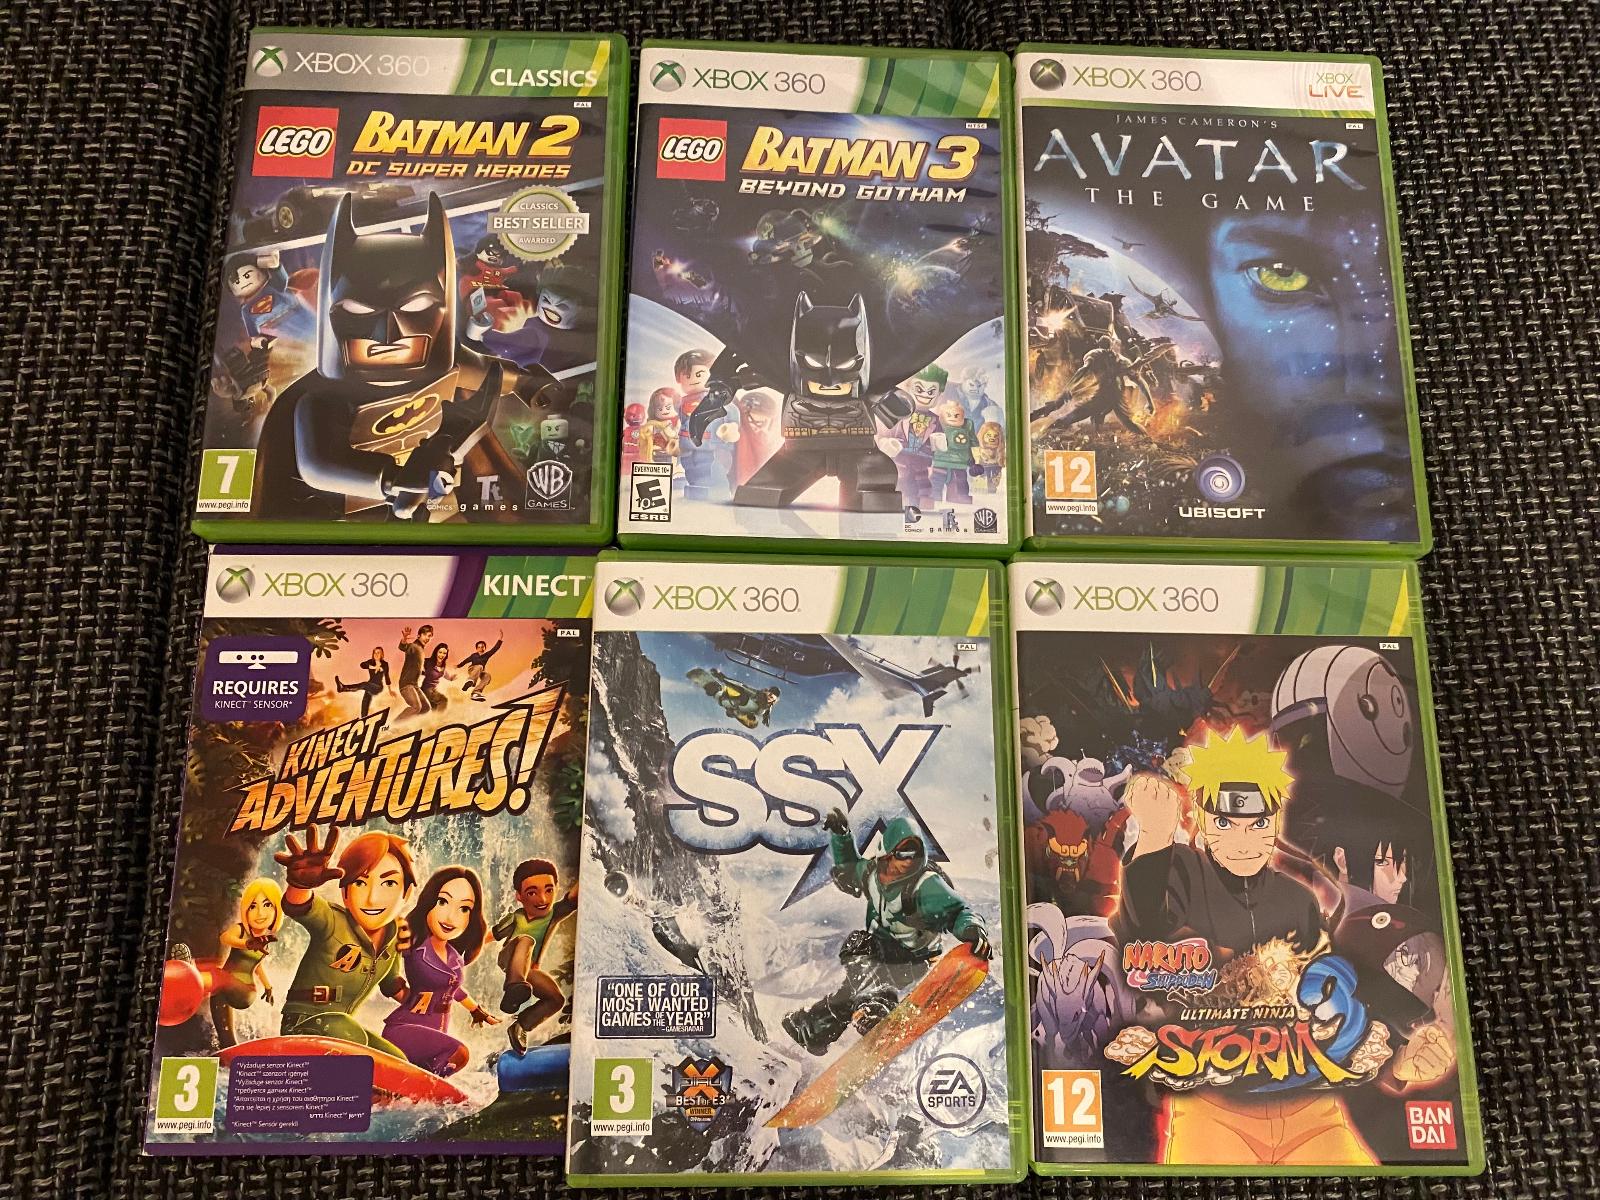 6 x hra pro: XBOX 360, Batman, Avatar, Kinect Adventures aj. | Aukro